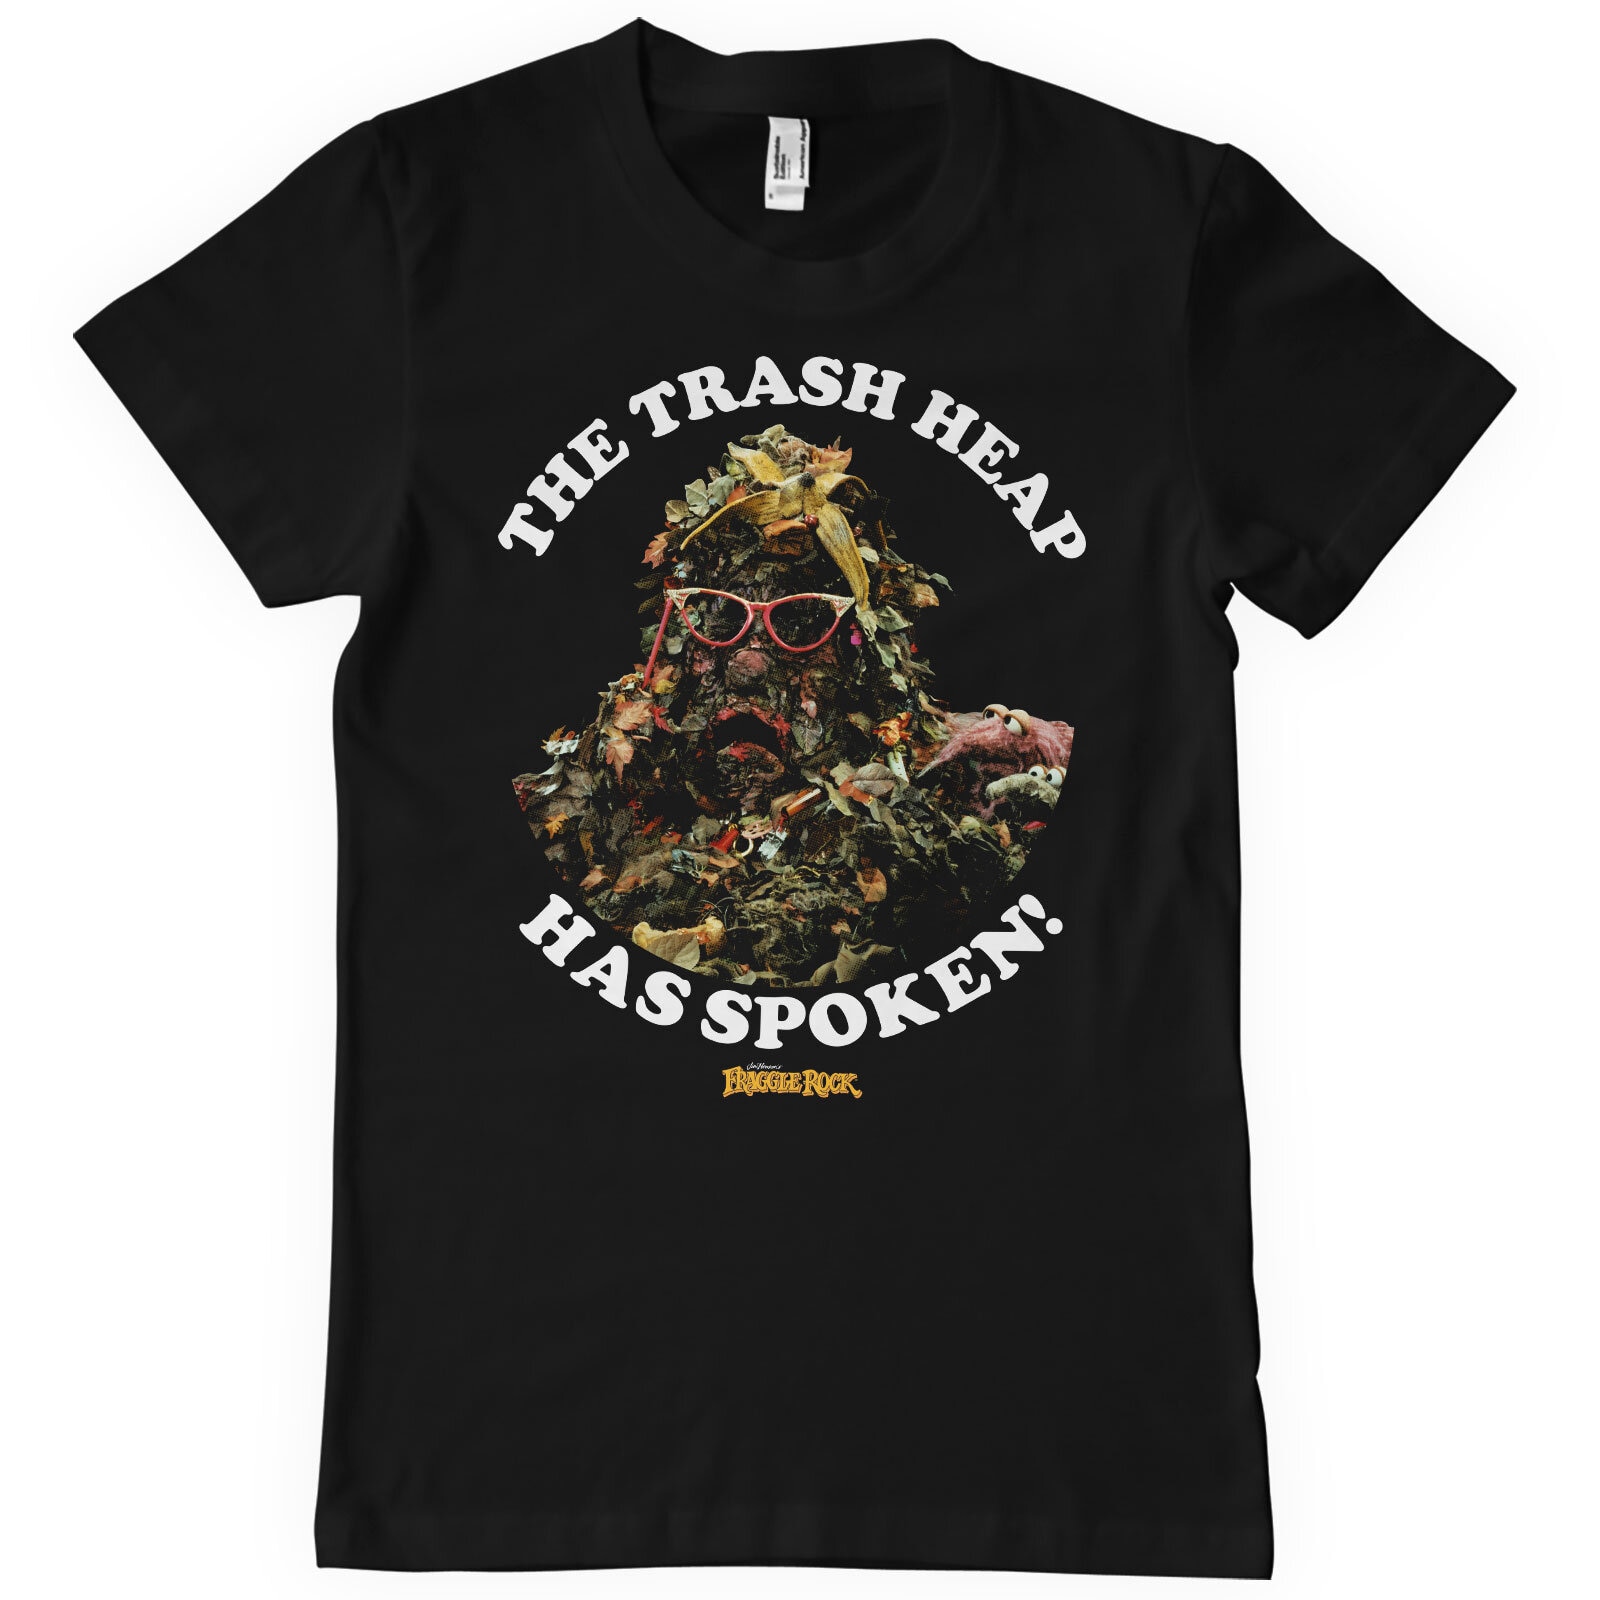 The Trash Heap Has Spoken T-Shirt